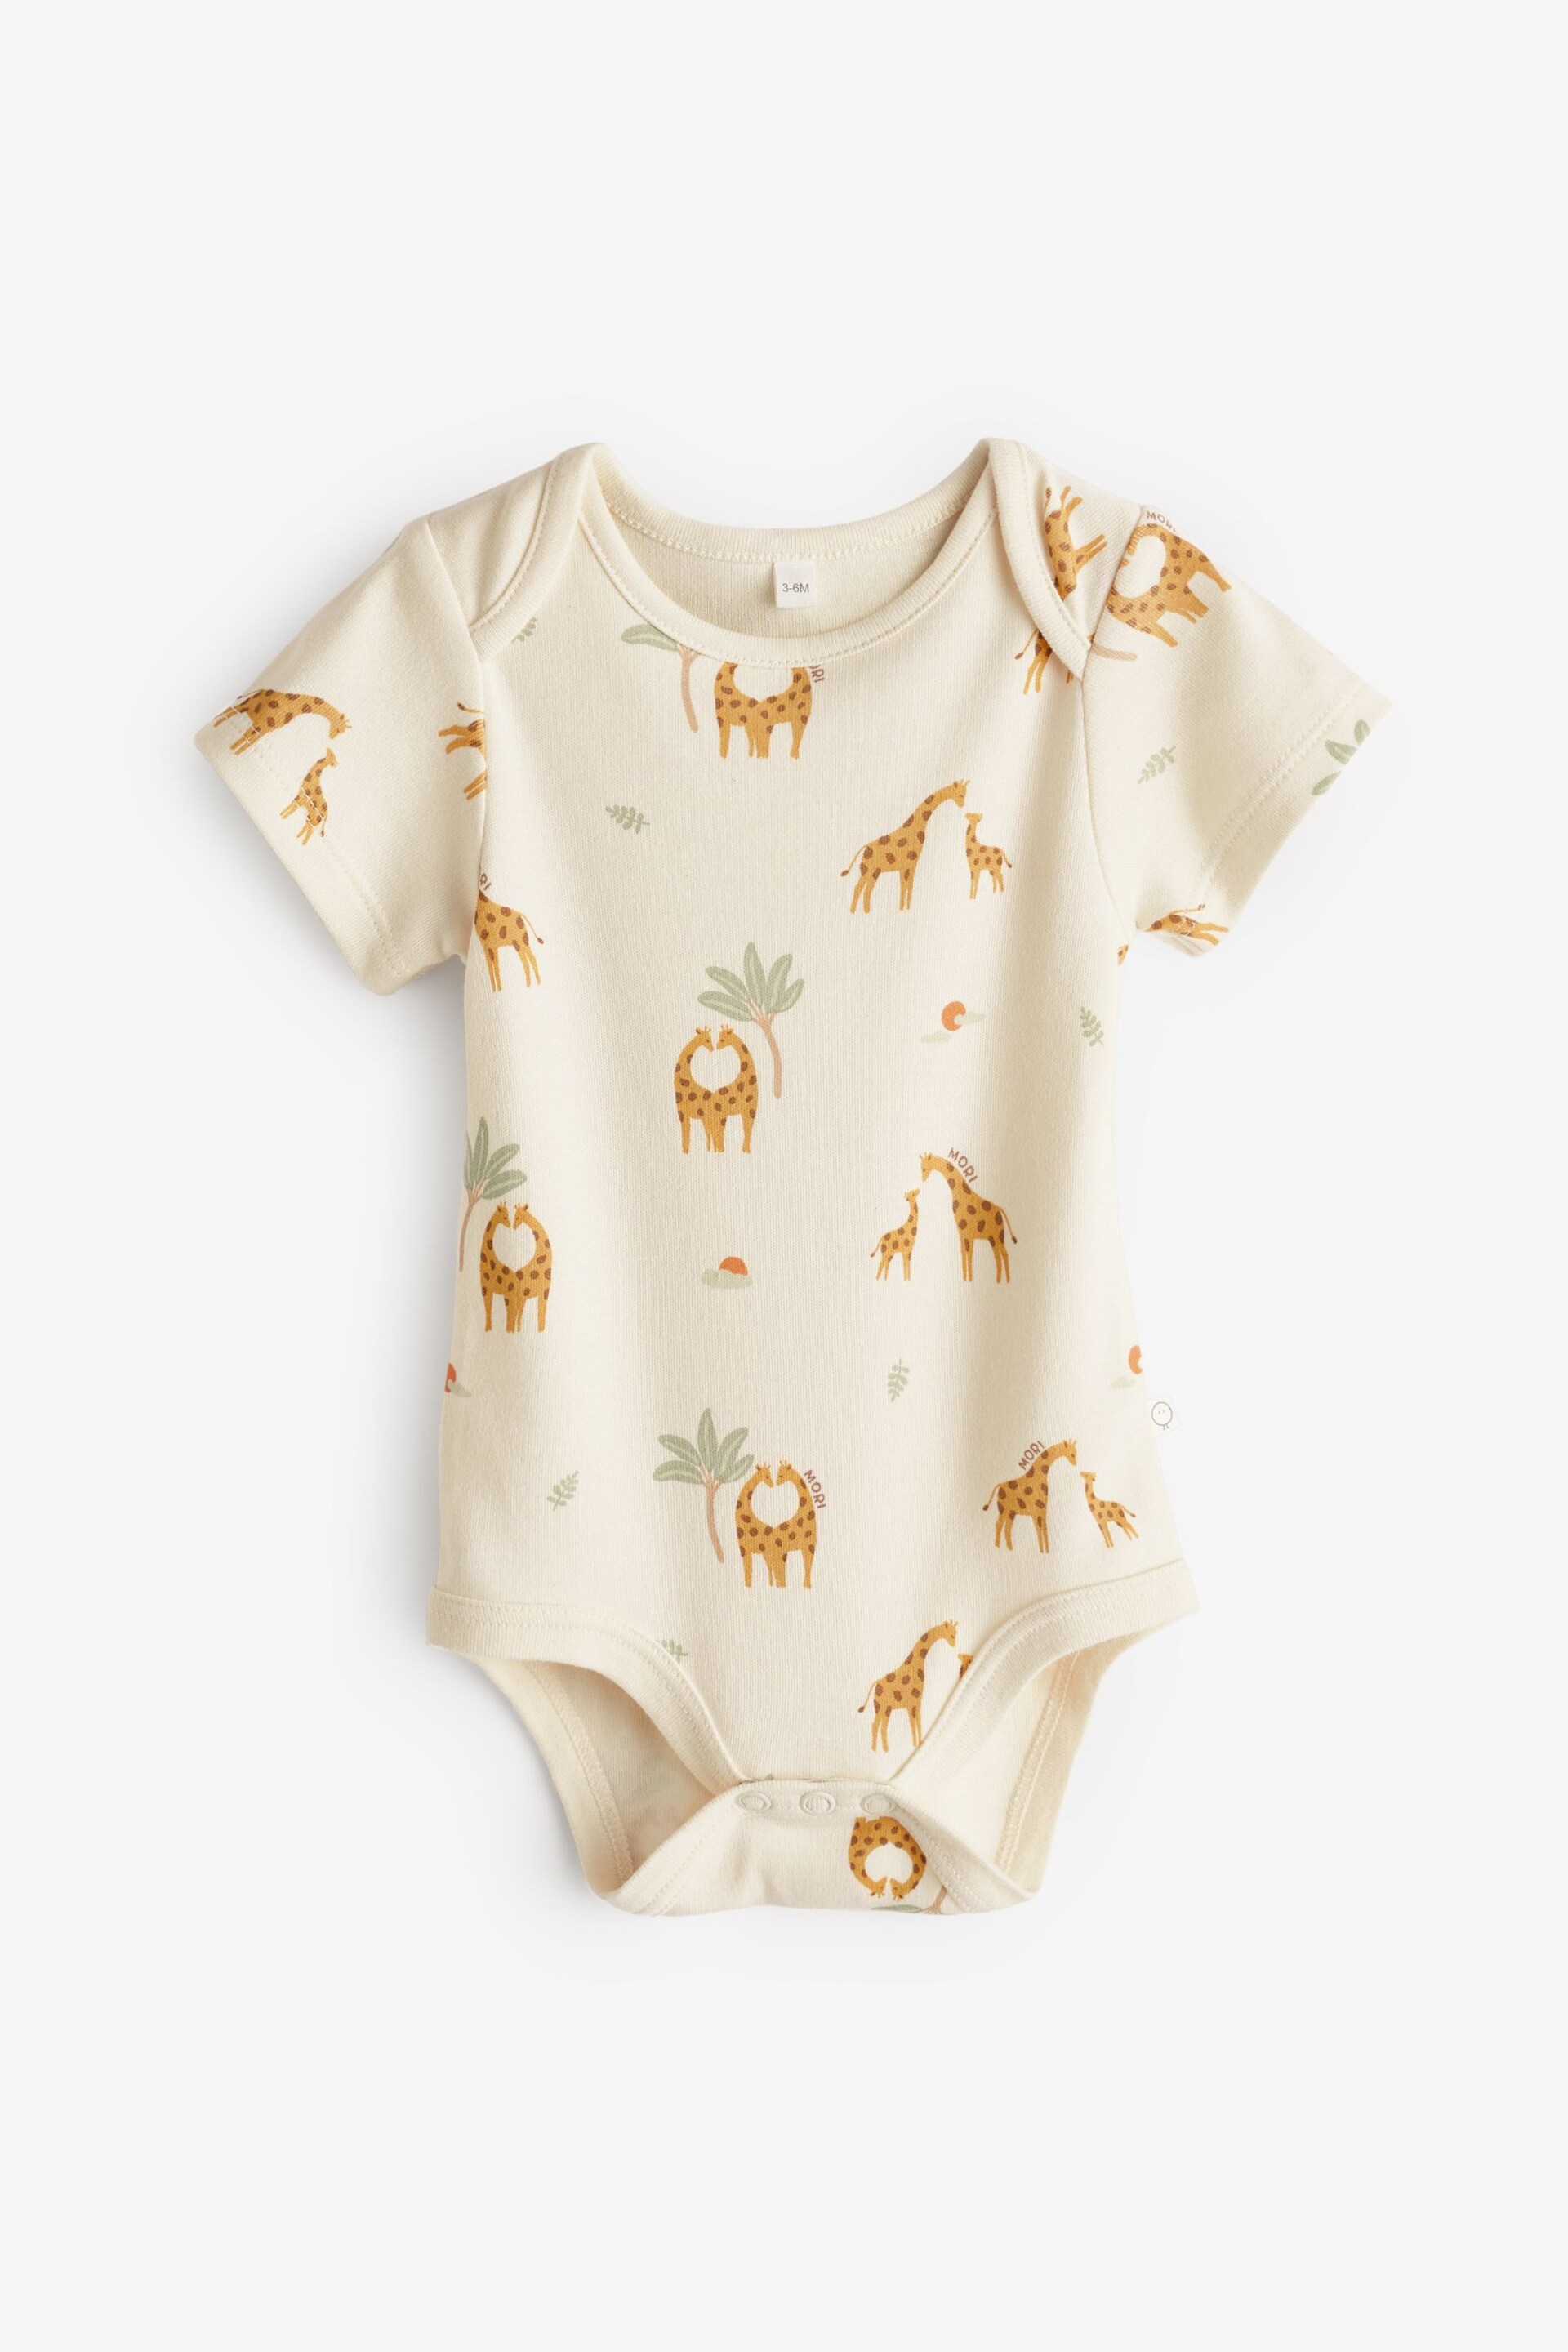 MORI Cream Organic Cotton & Bamboo Giraffe Short Sleeve Bodysuit - Image 1 of 2